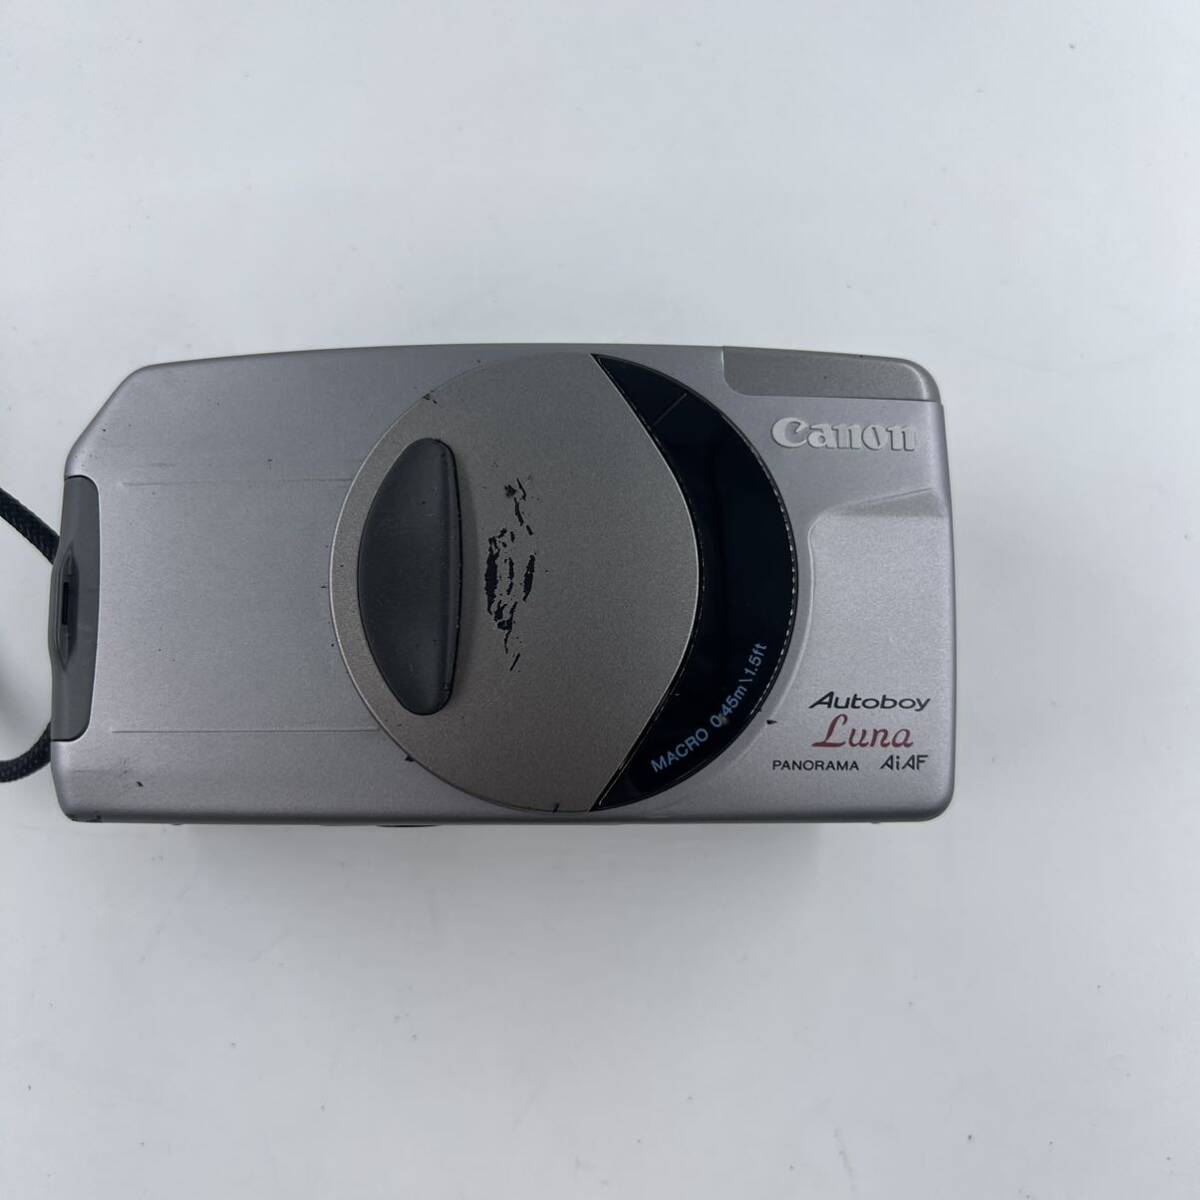 K4 Canon キヤノン Autoboy Luna PANORAMA AiAF 0.45ml \1.51ft 28-70mm 通電確認済み シャッター音確認済み フィルムカメラ の画像2